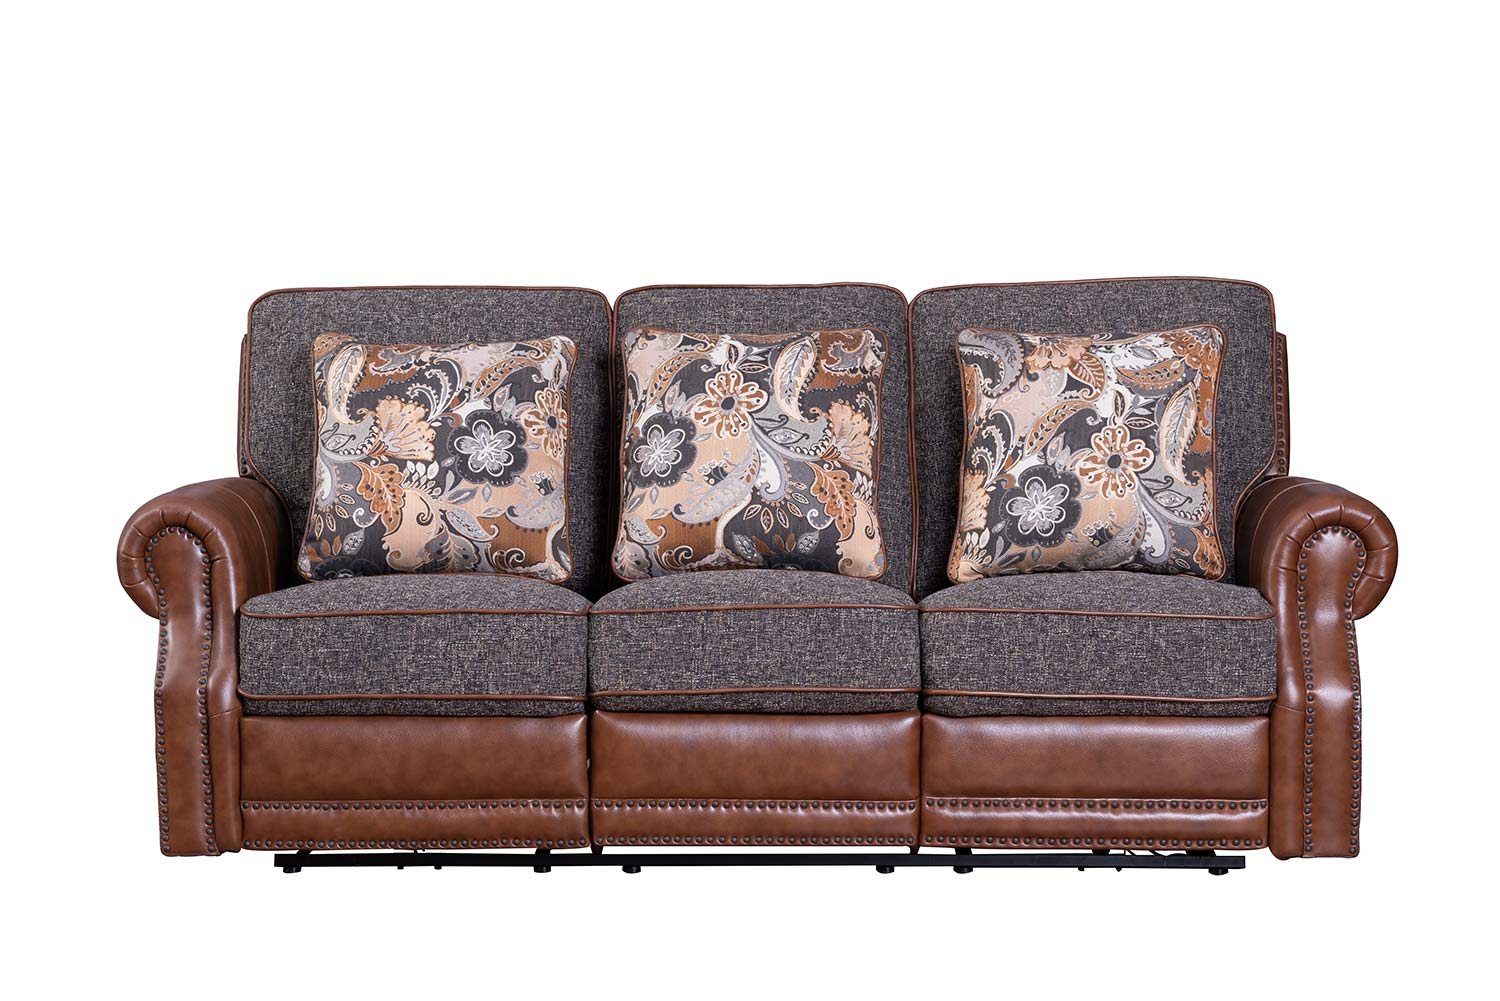 Barcalounger Jefferson Power Reclining Sofa - Ryegate Tawny all leather/Eddystone Arabica fabric